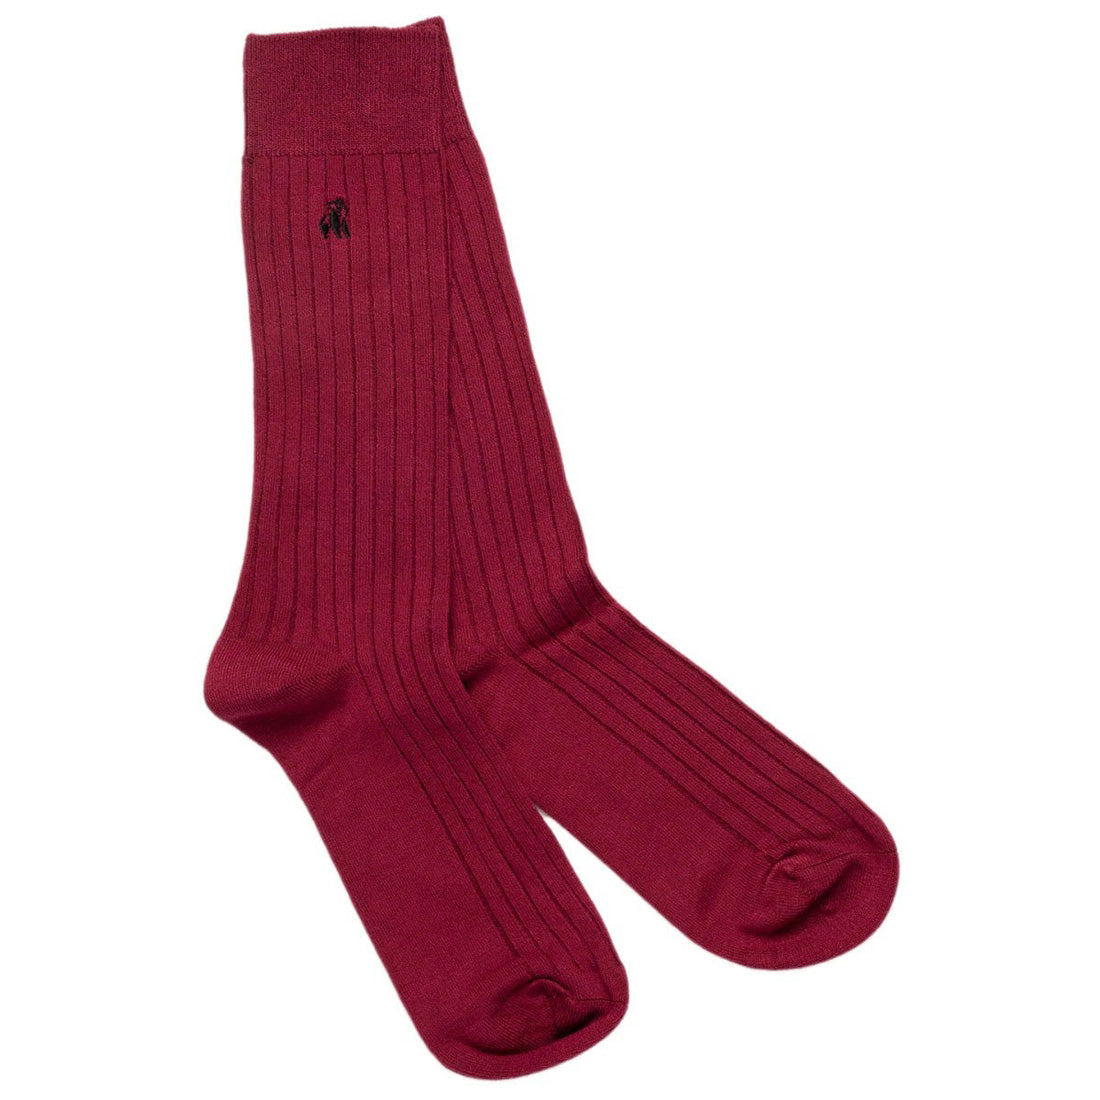 socks-burgundy-bamboo-socks-comfort-cuff-1.jpg